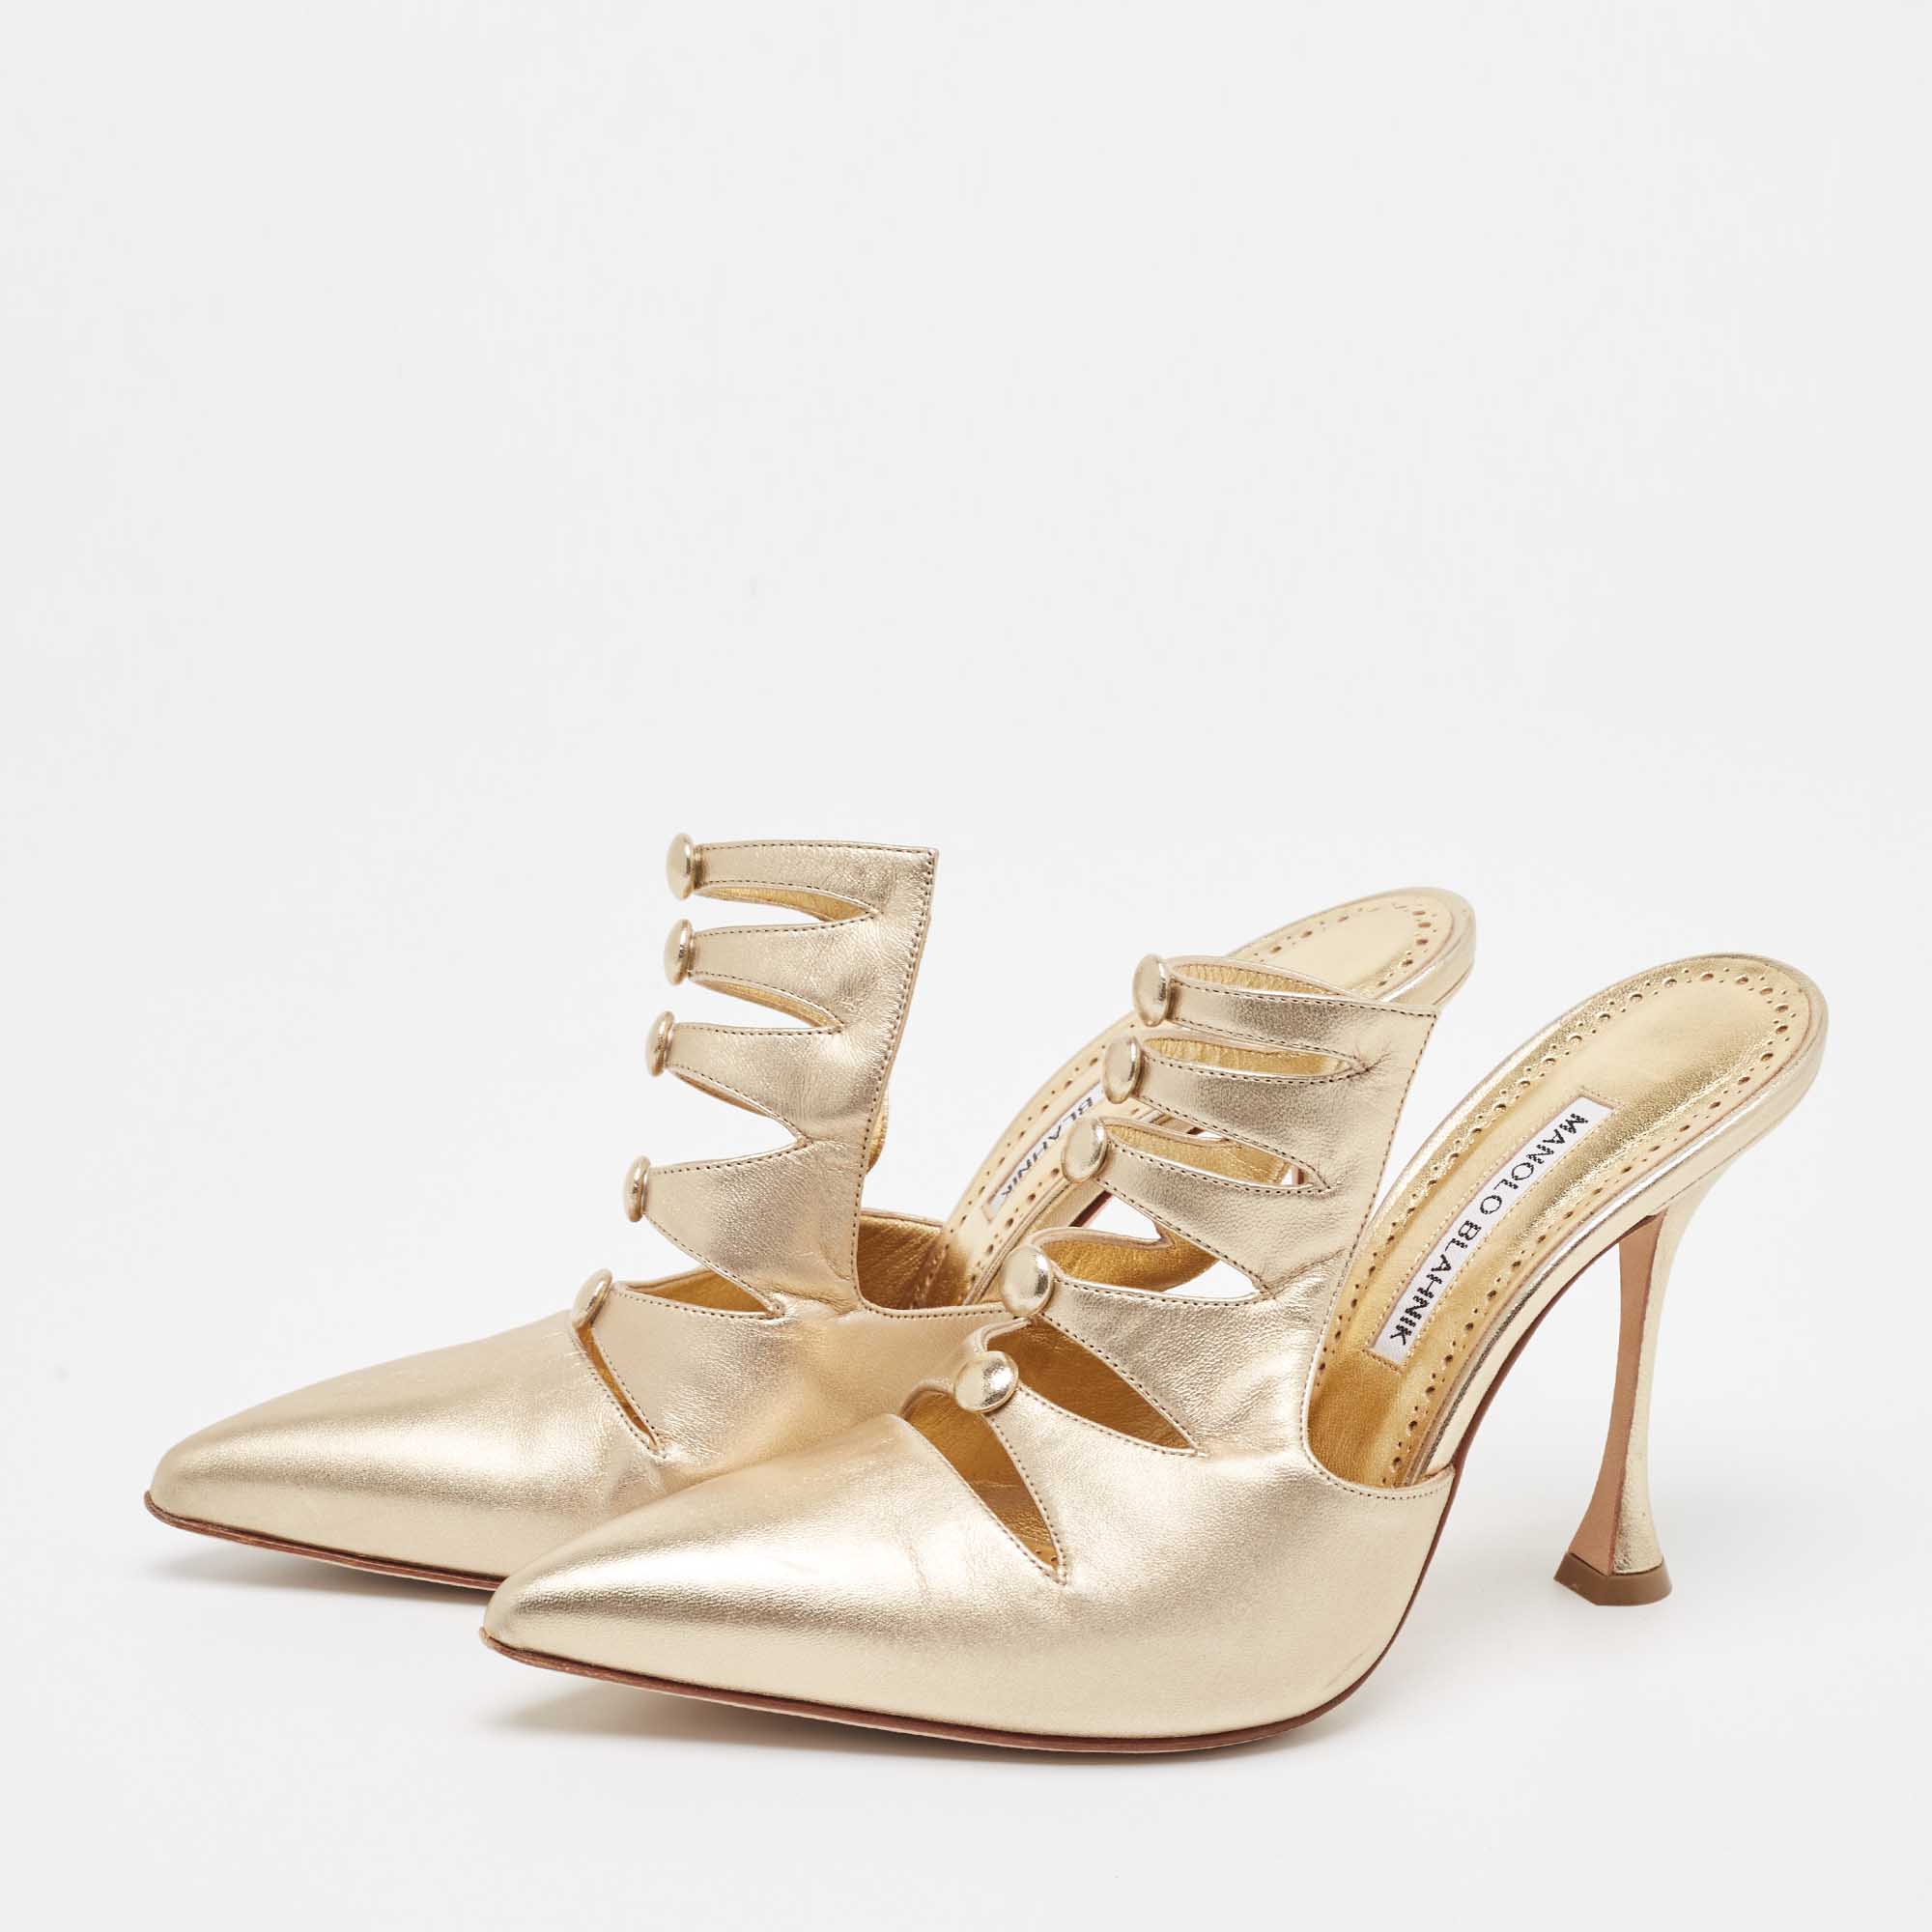 Sandals  The Luxury Closet Manolo Blahnik Metallic Gold  Leather Mules Size 38